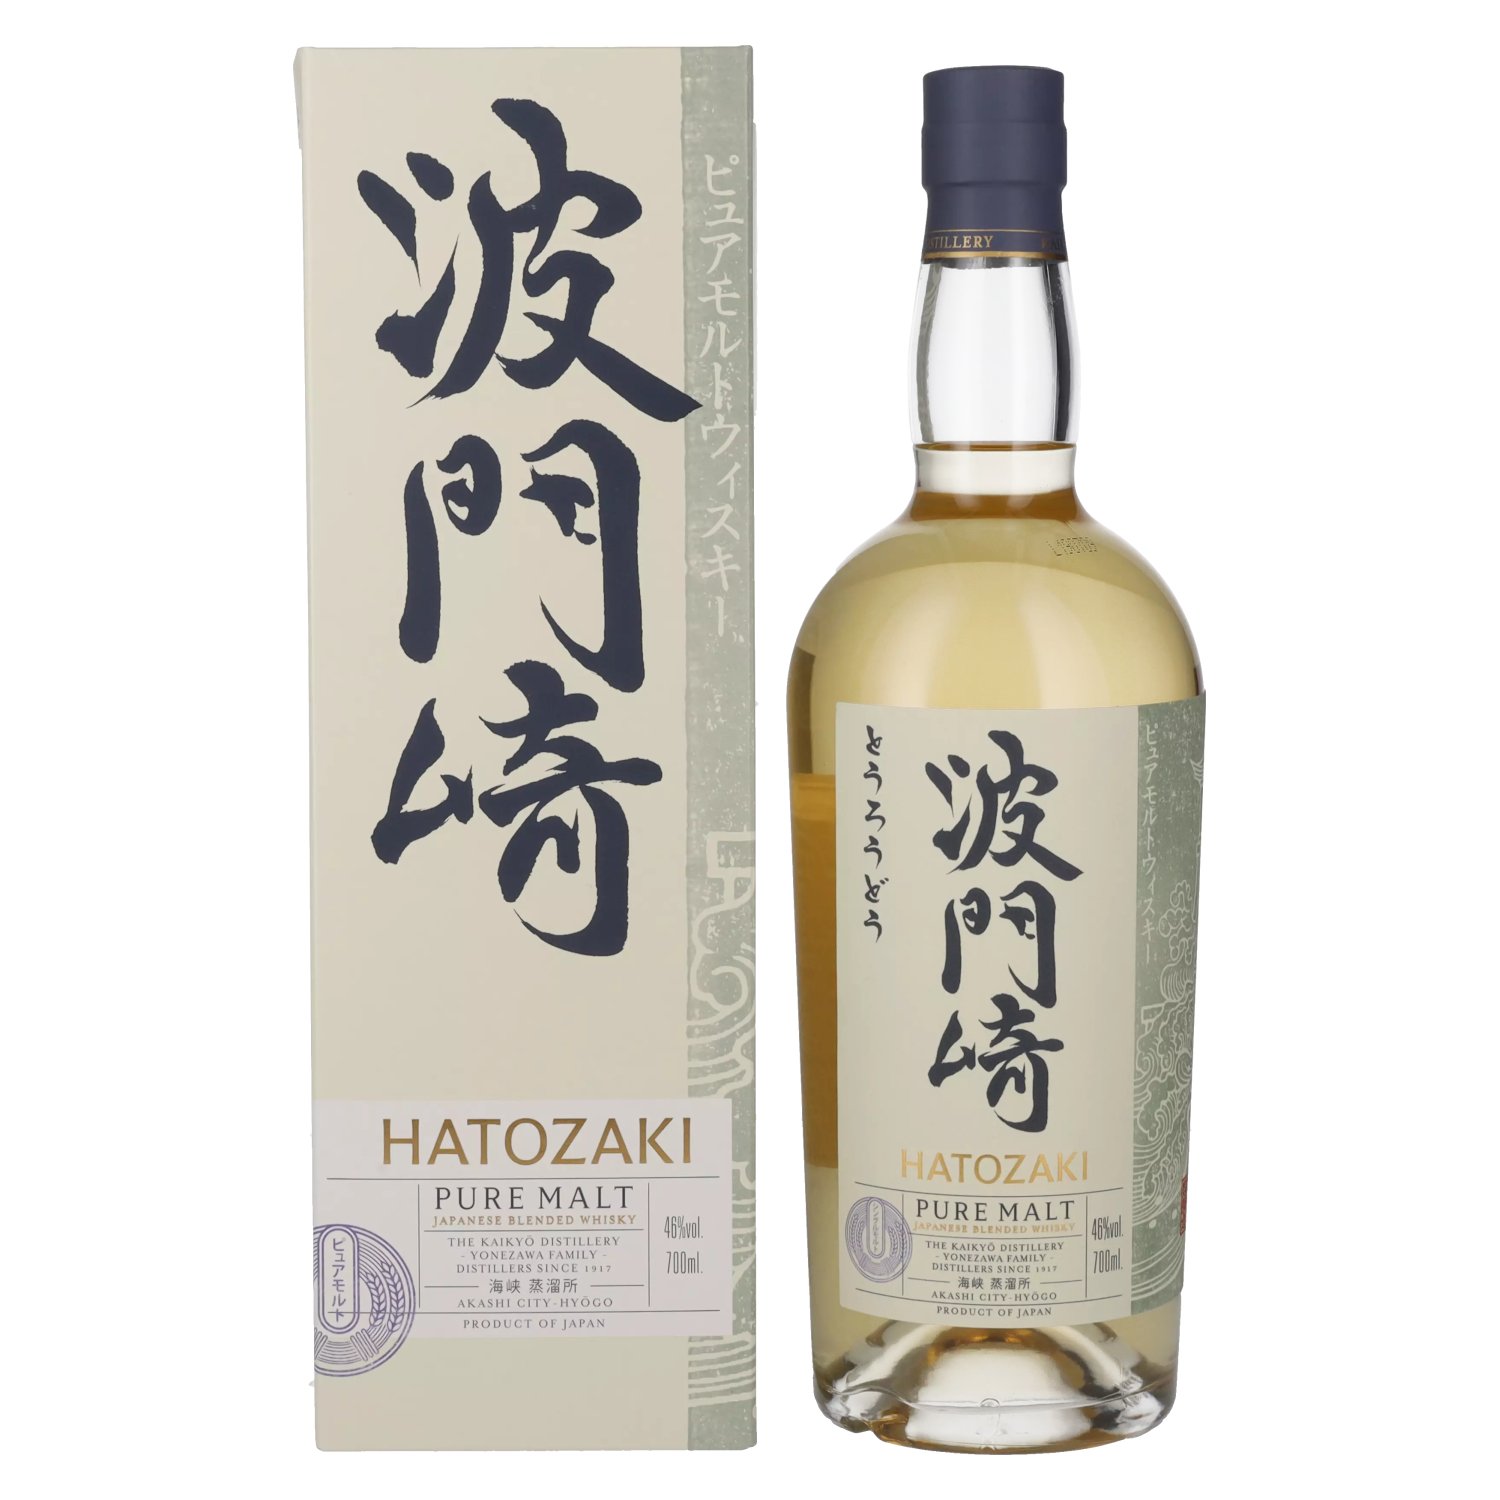 Hatozaki PURE MALT Geschenkbox Blended Vol. in Whisky 0,7l Japanese 46